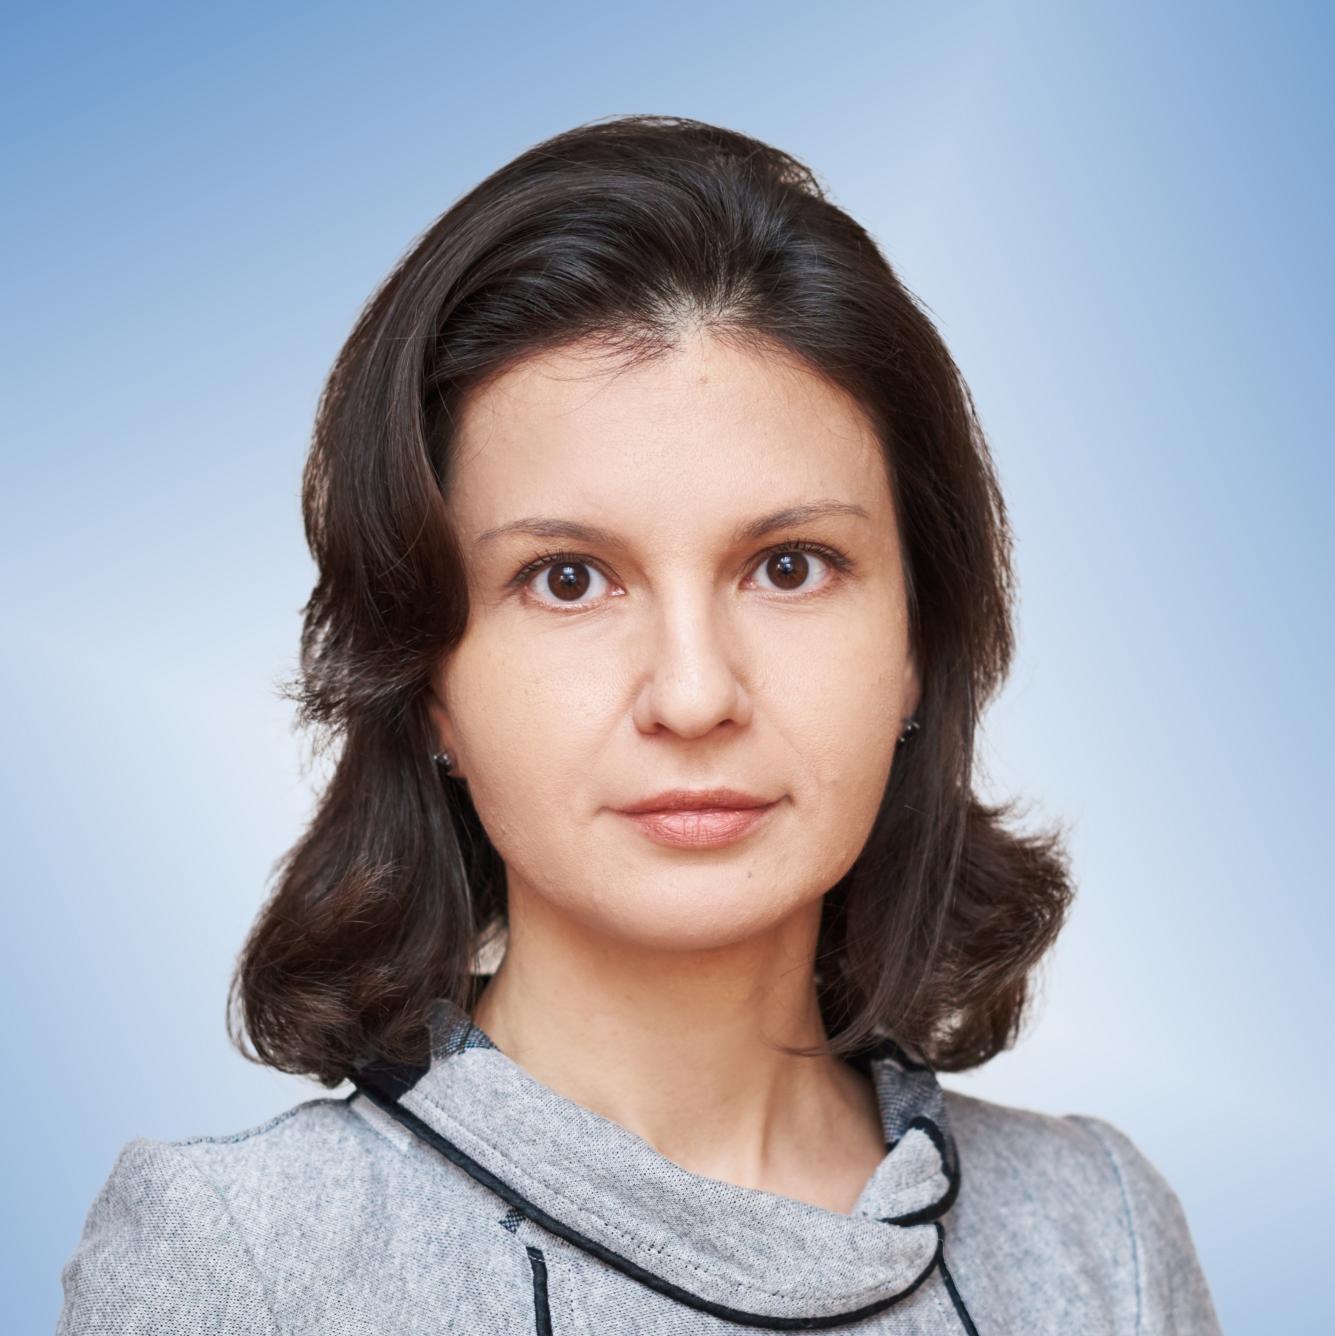 Яхнеева Ирина Валерьевна